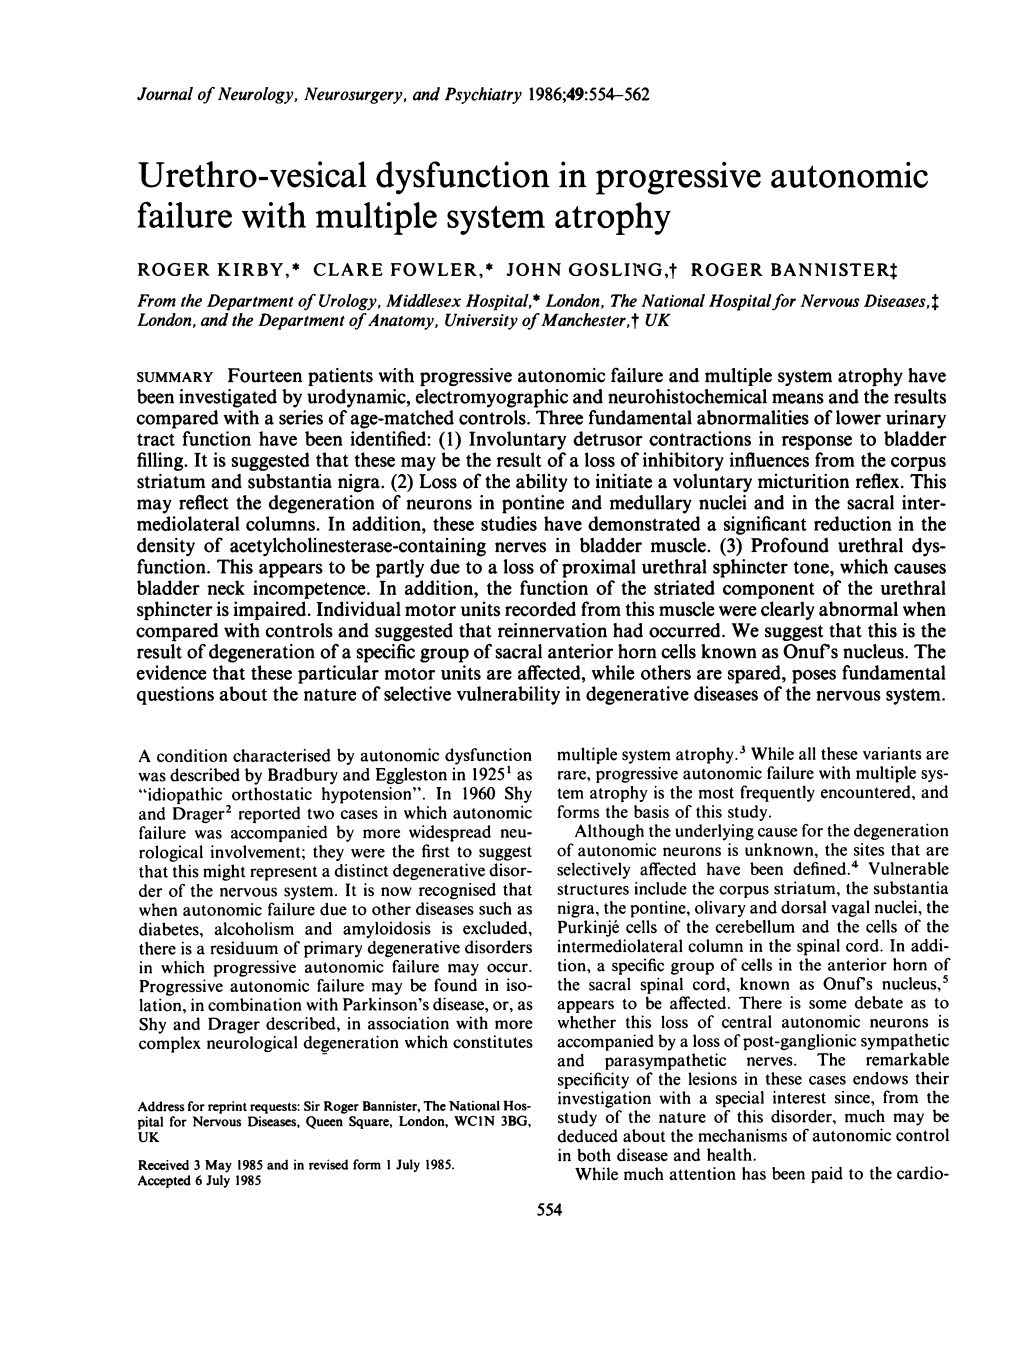 Urethro-Vesical Dysfunction in Progressive Autonomic Failure with Multiple System Atrophy